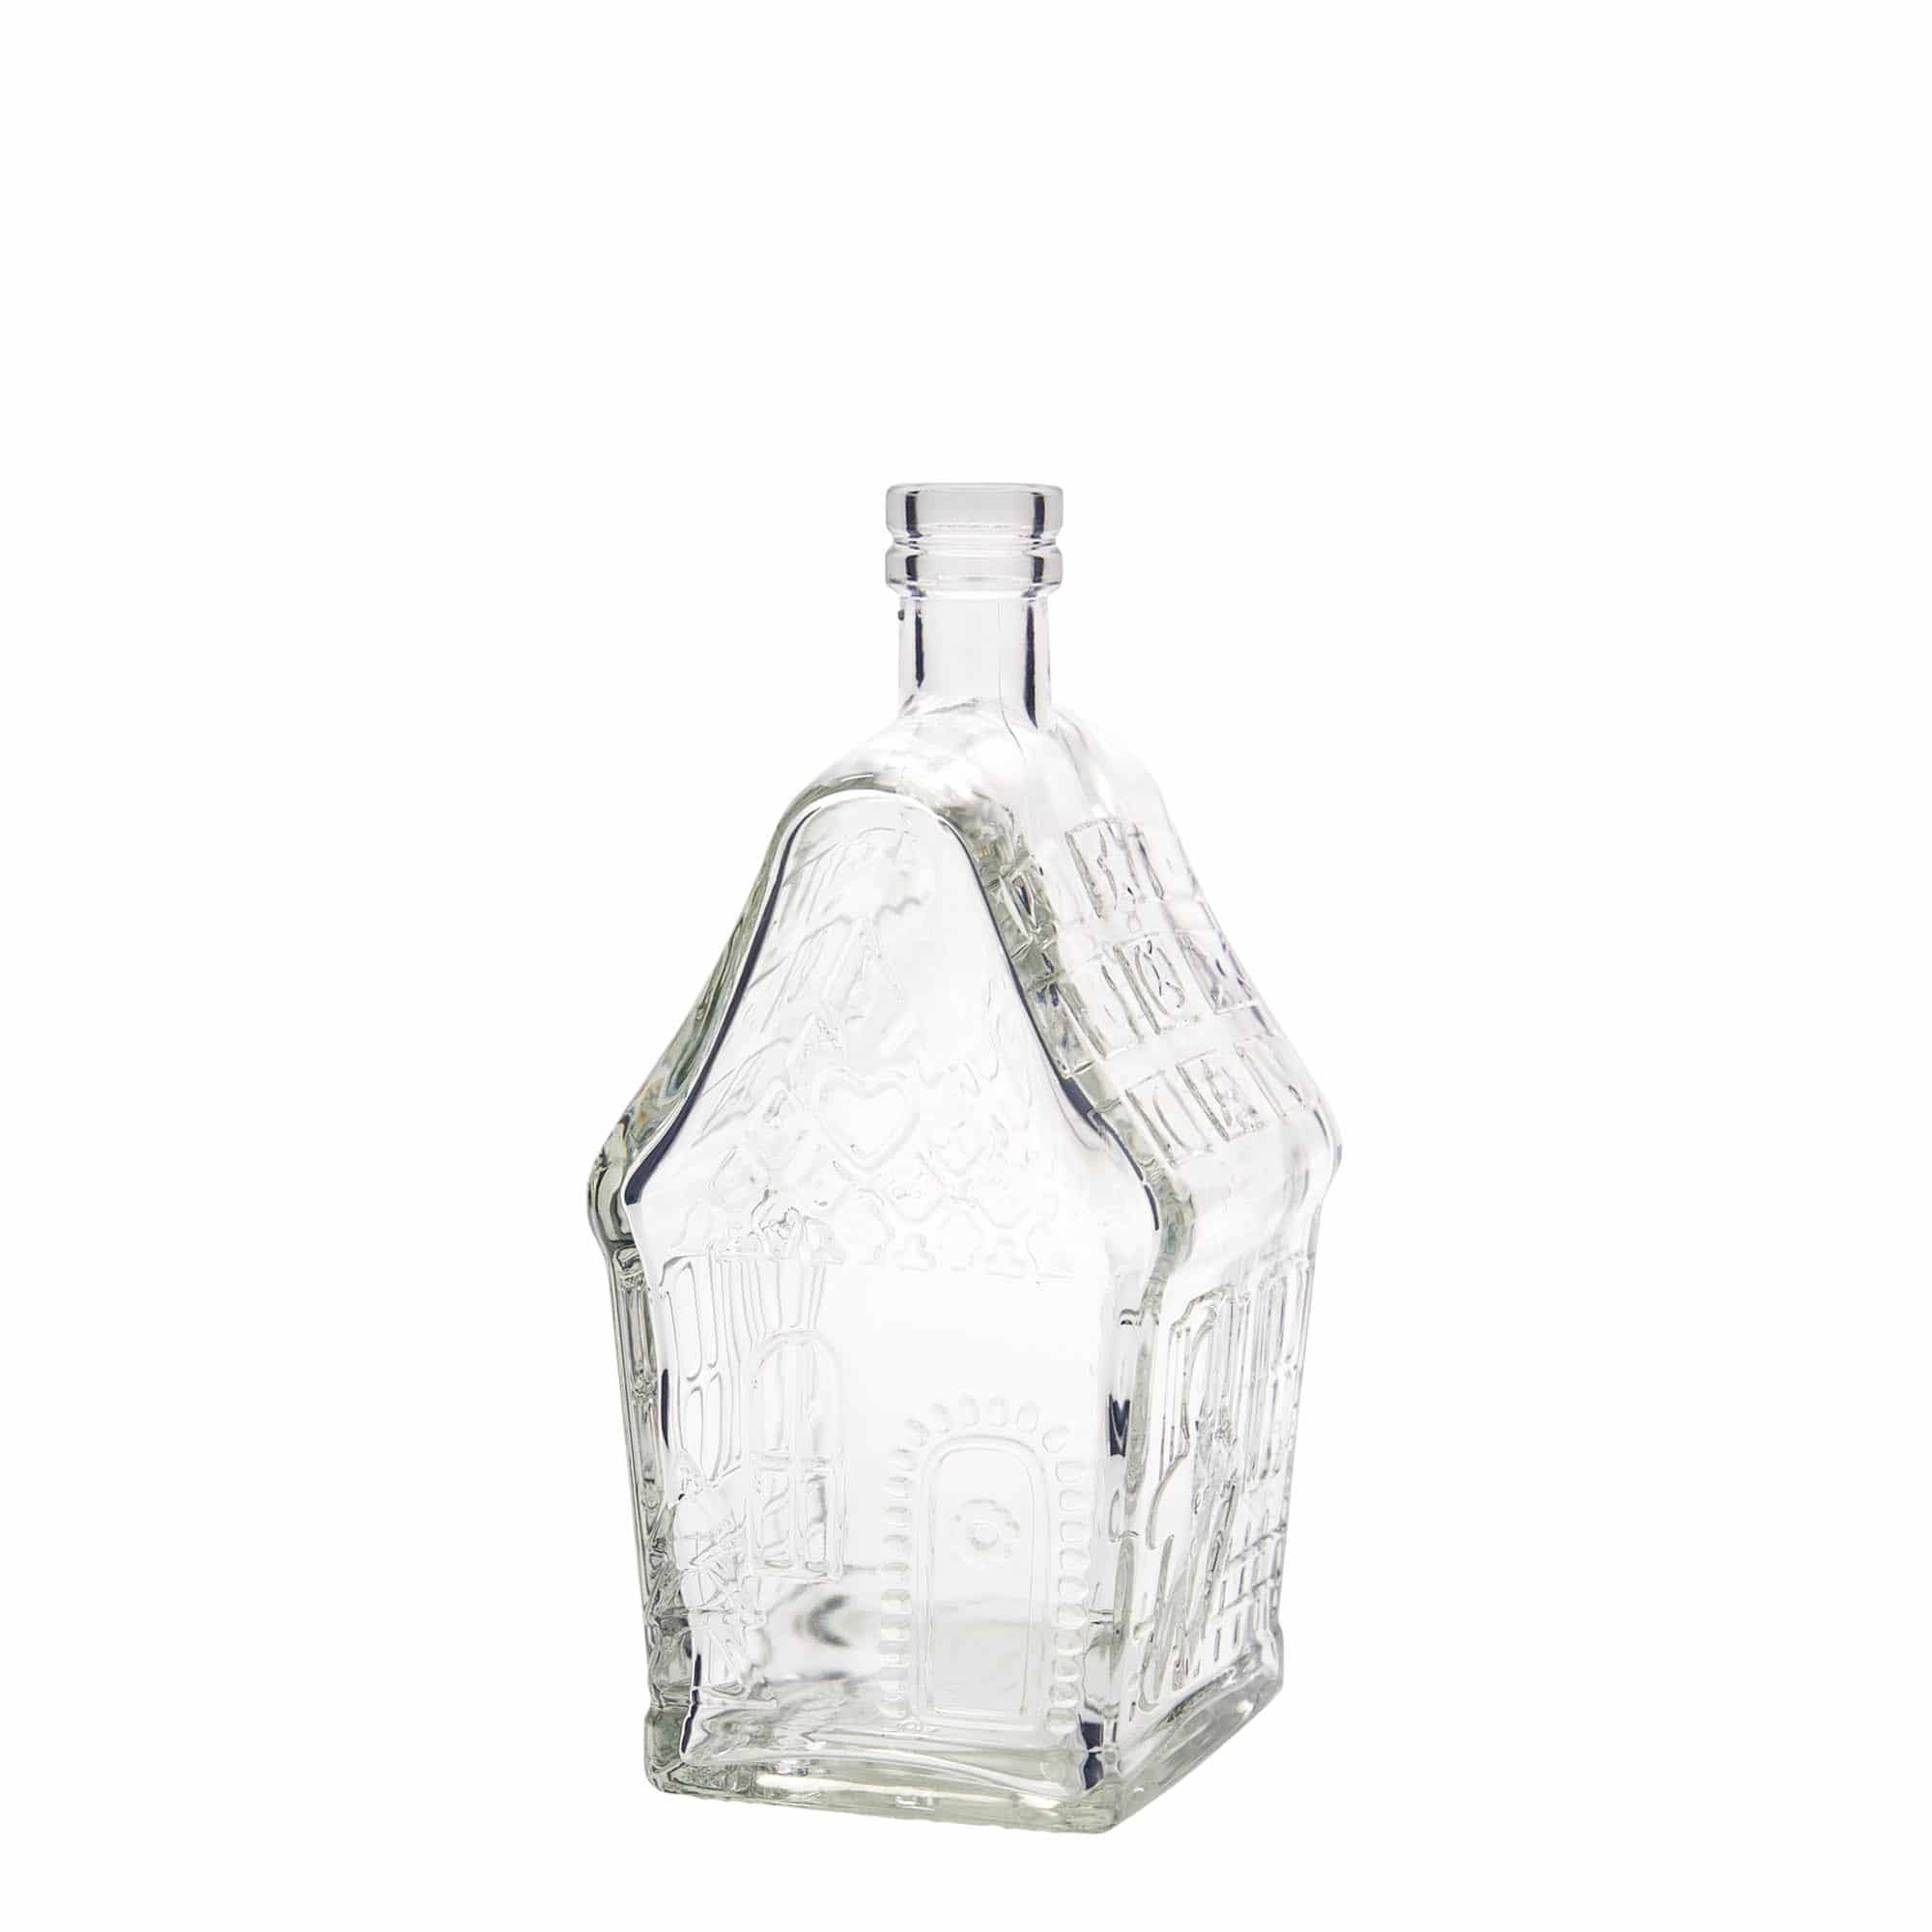 500 ml glass bottle 'Gingerbread House', rectangular, closure: cork